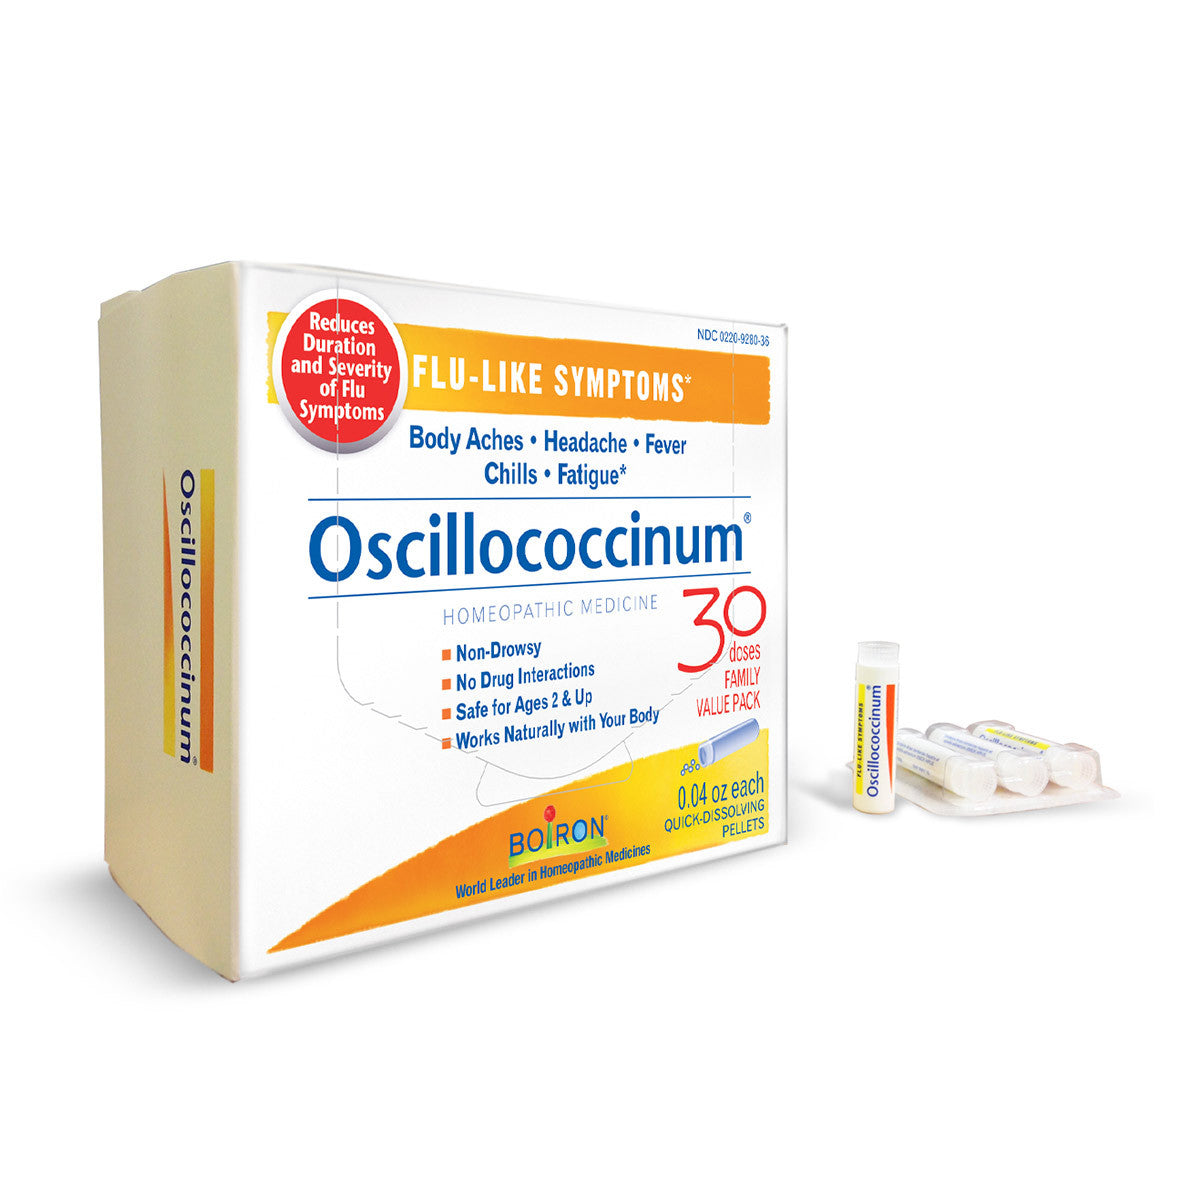 Primary image of Oscillococcinum - 30 Doses